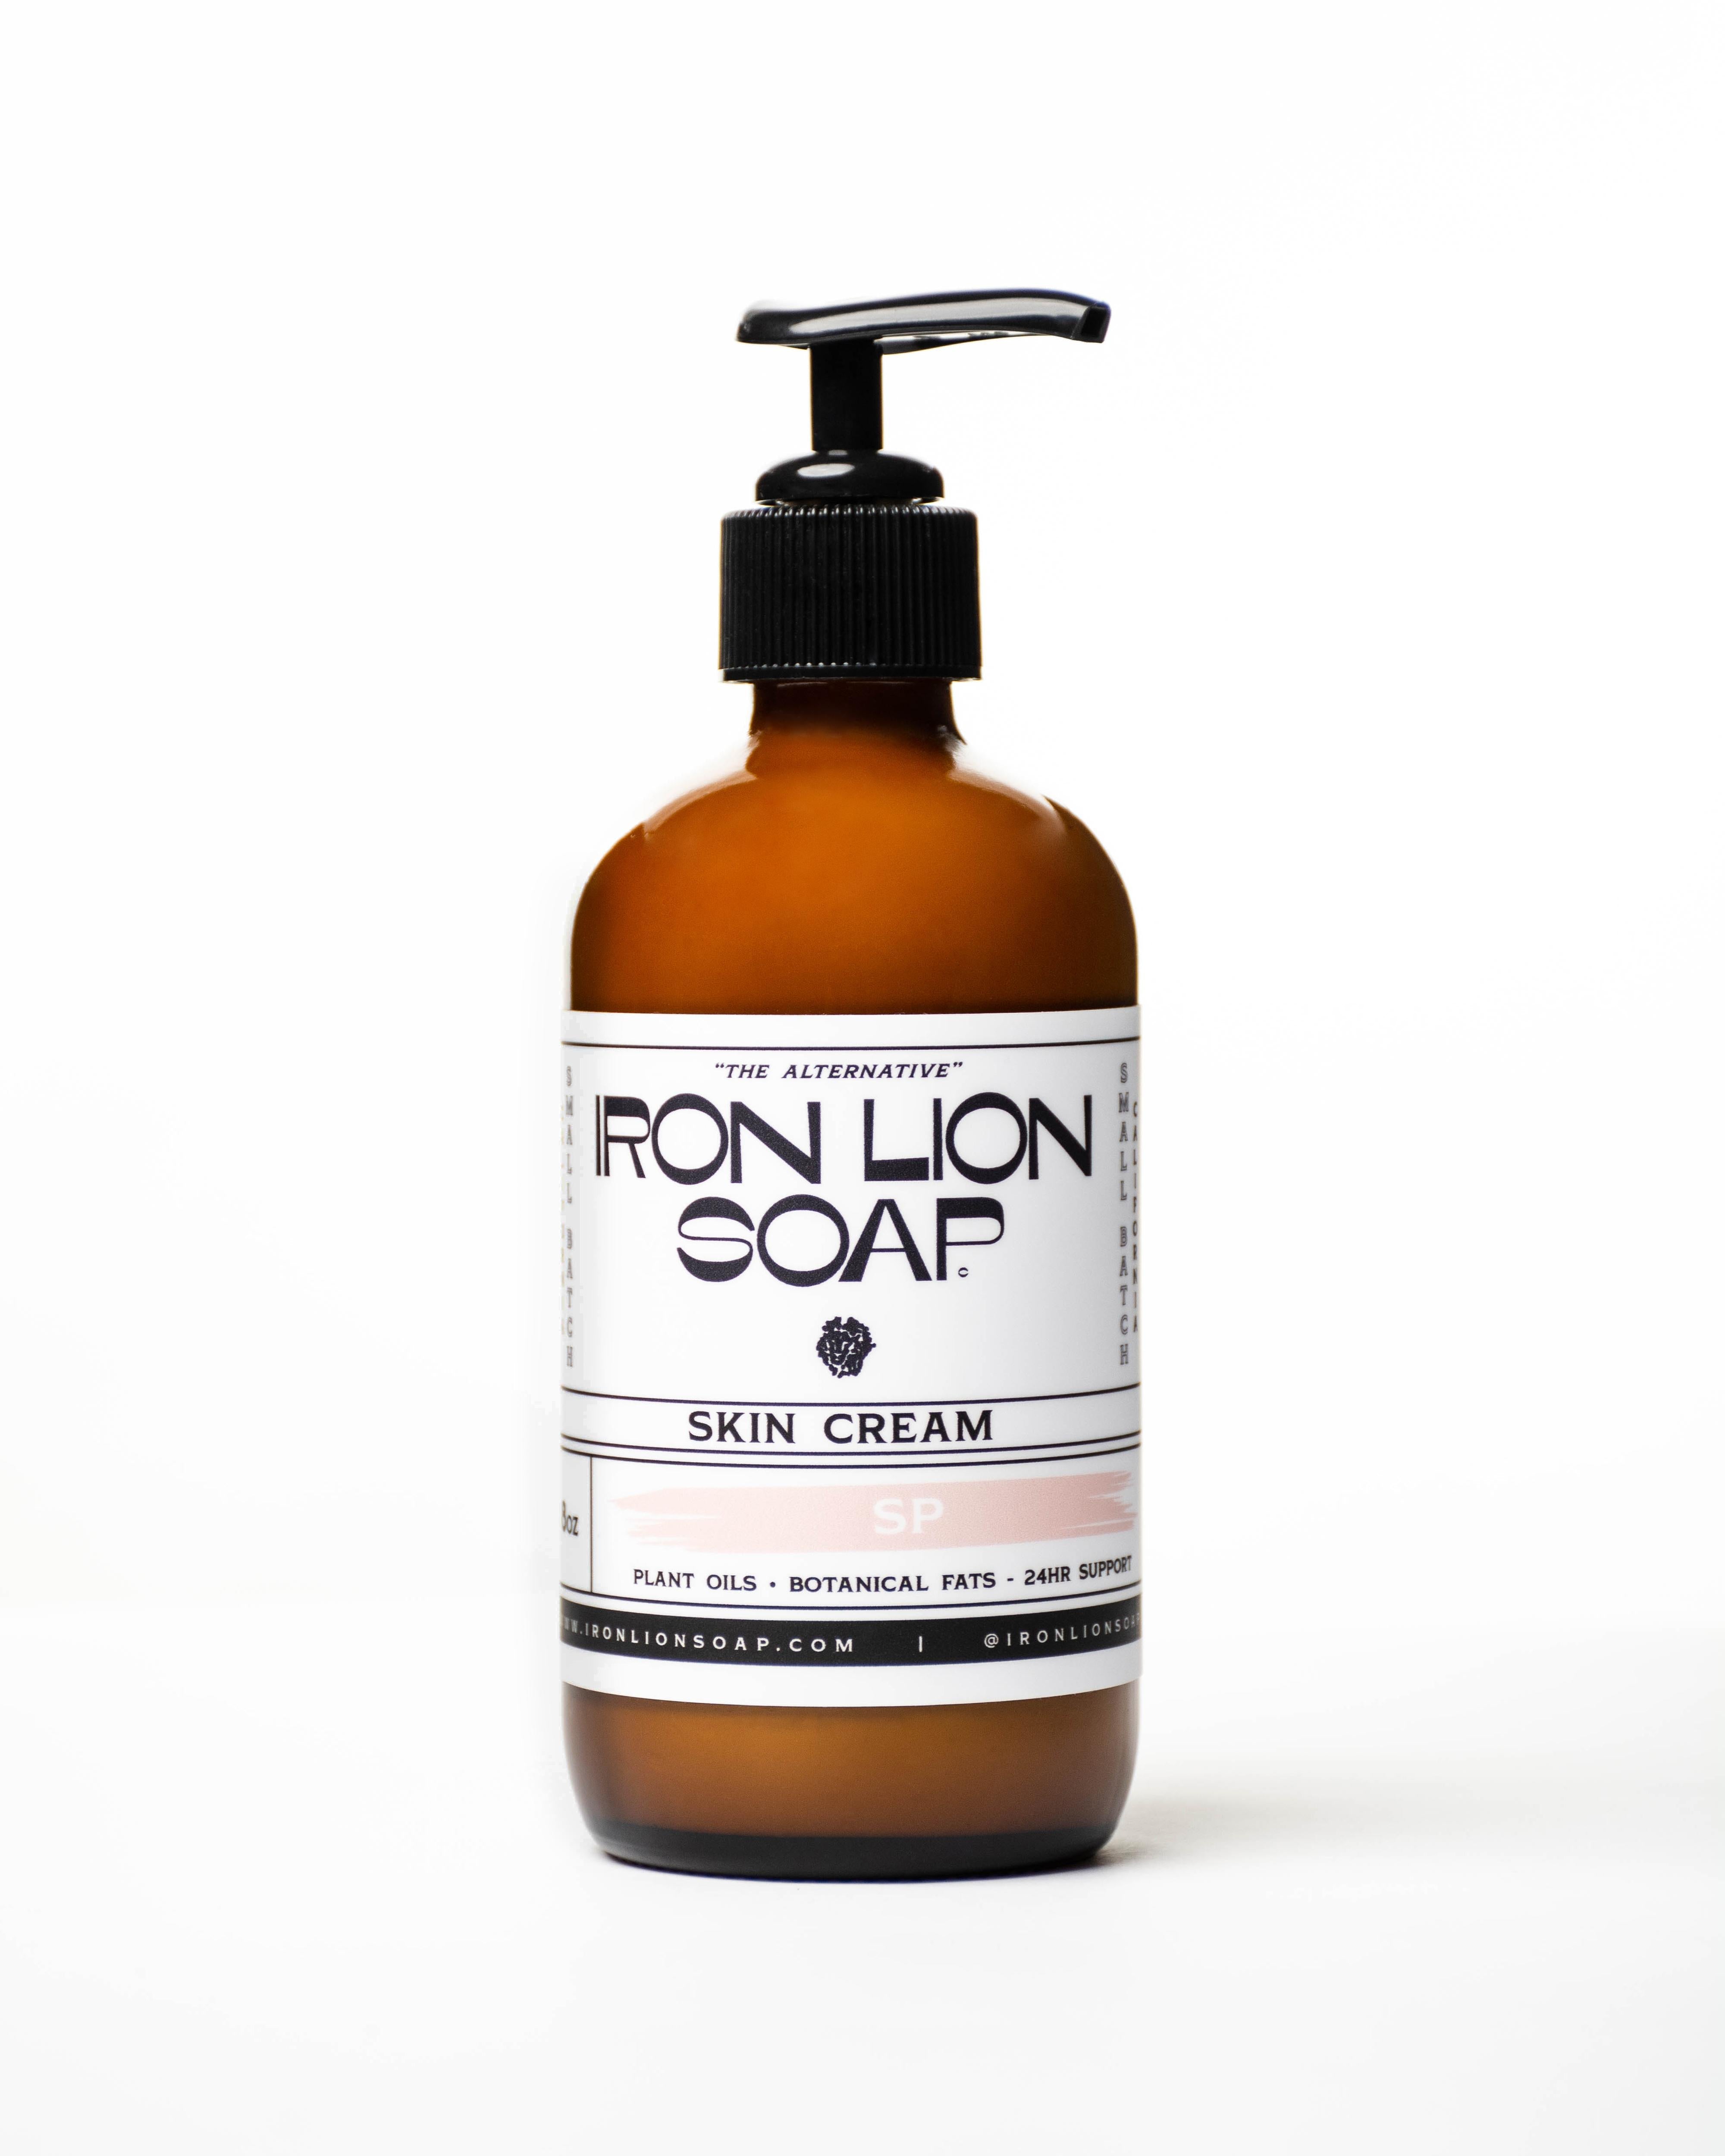 8oz Daily Skin Cream Iron Lion Soap SP 